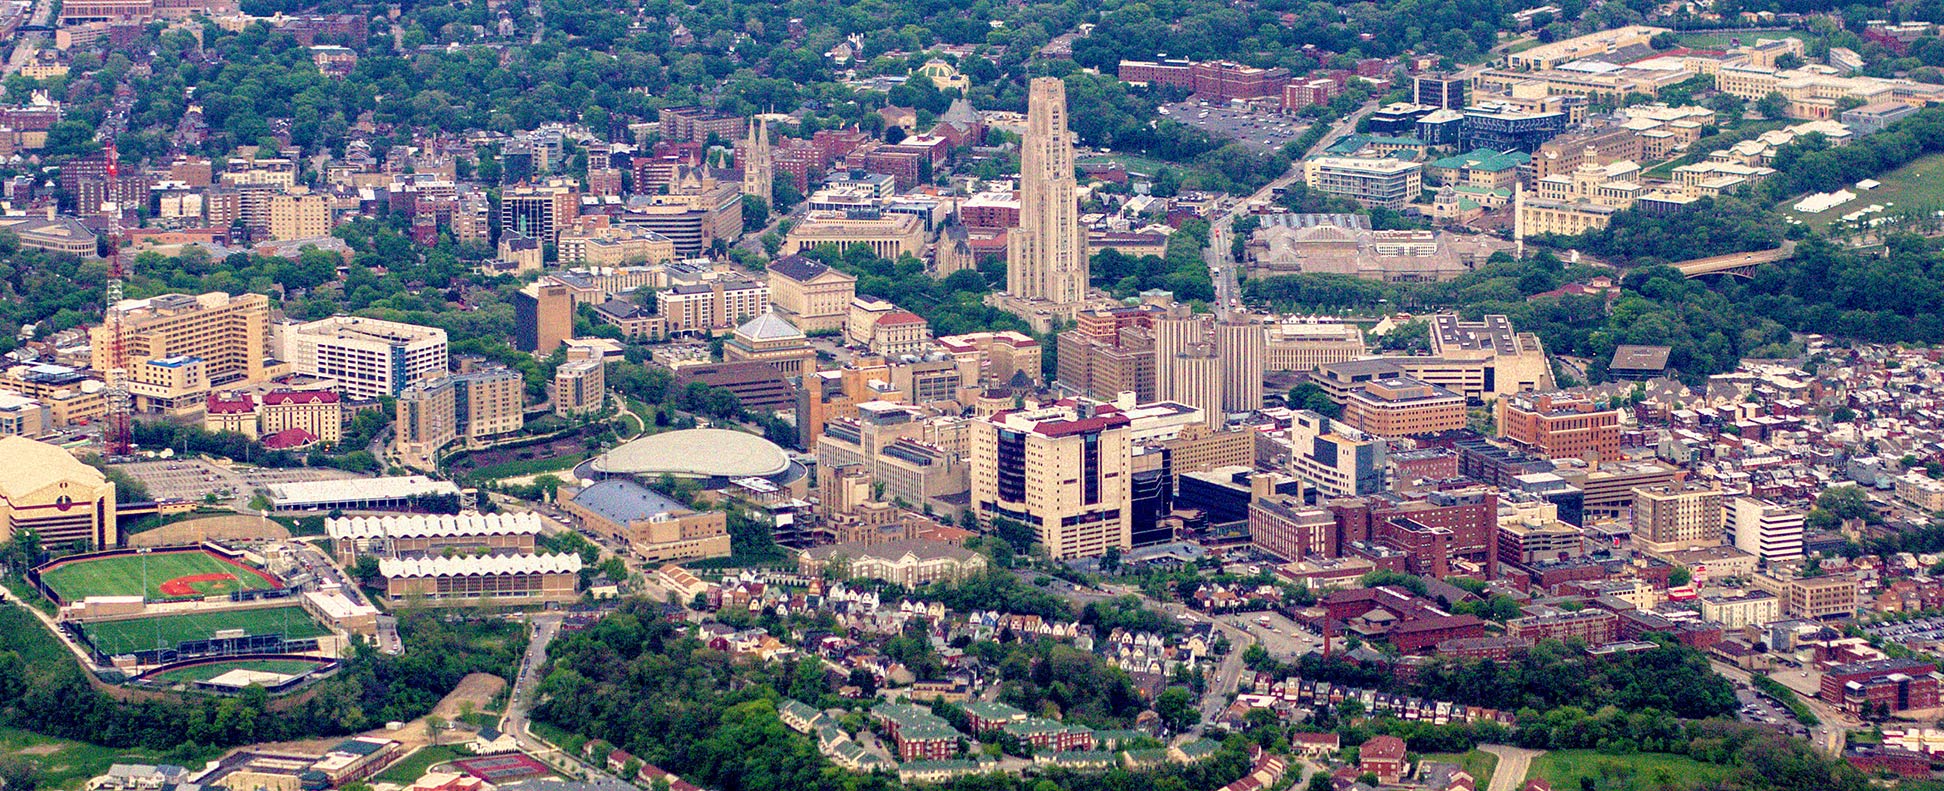 Aerial view of Oakland neighborhood of Pittsburgh,Penn